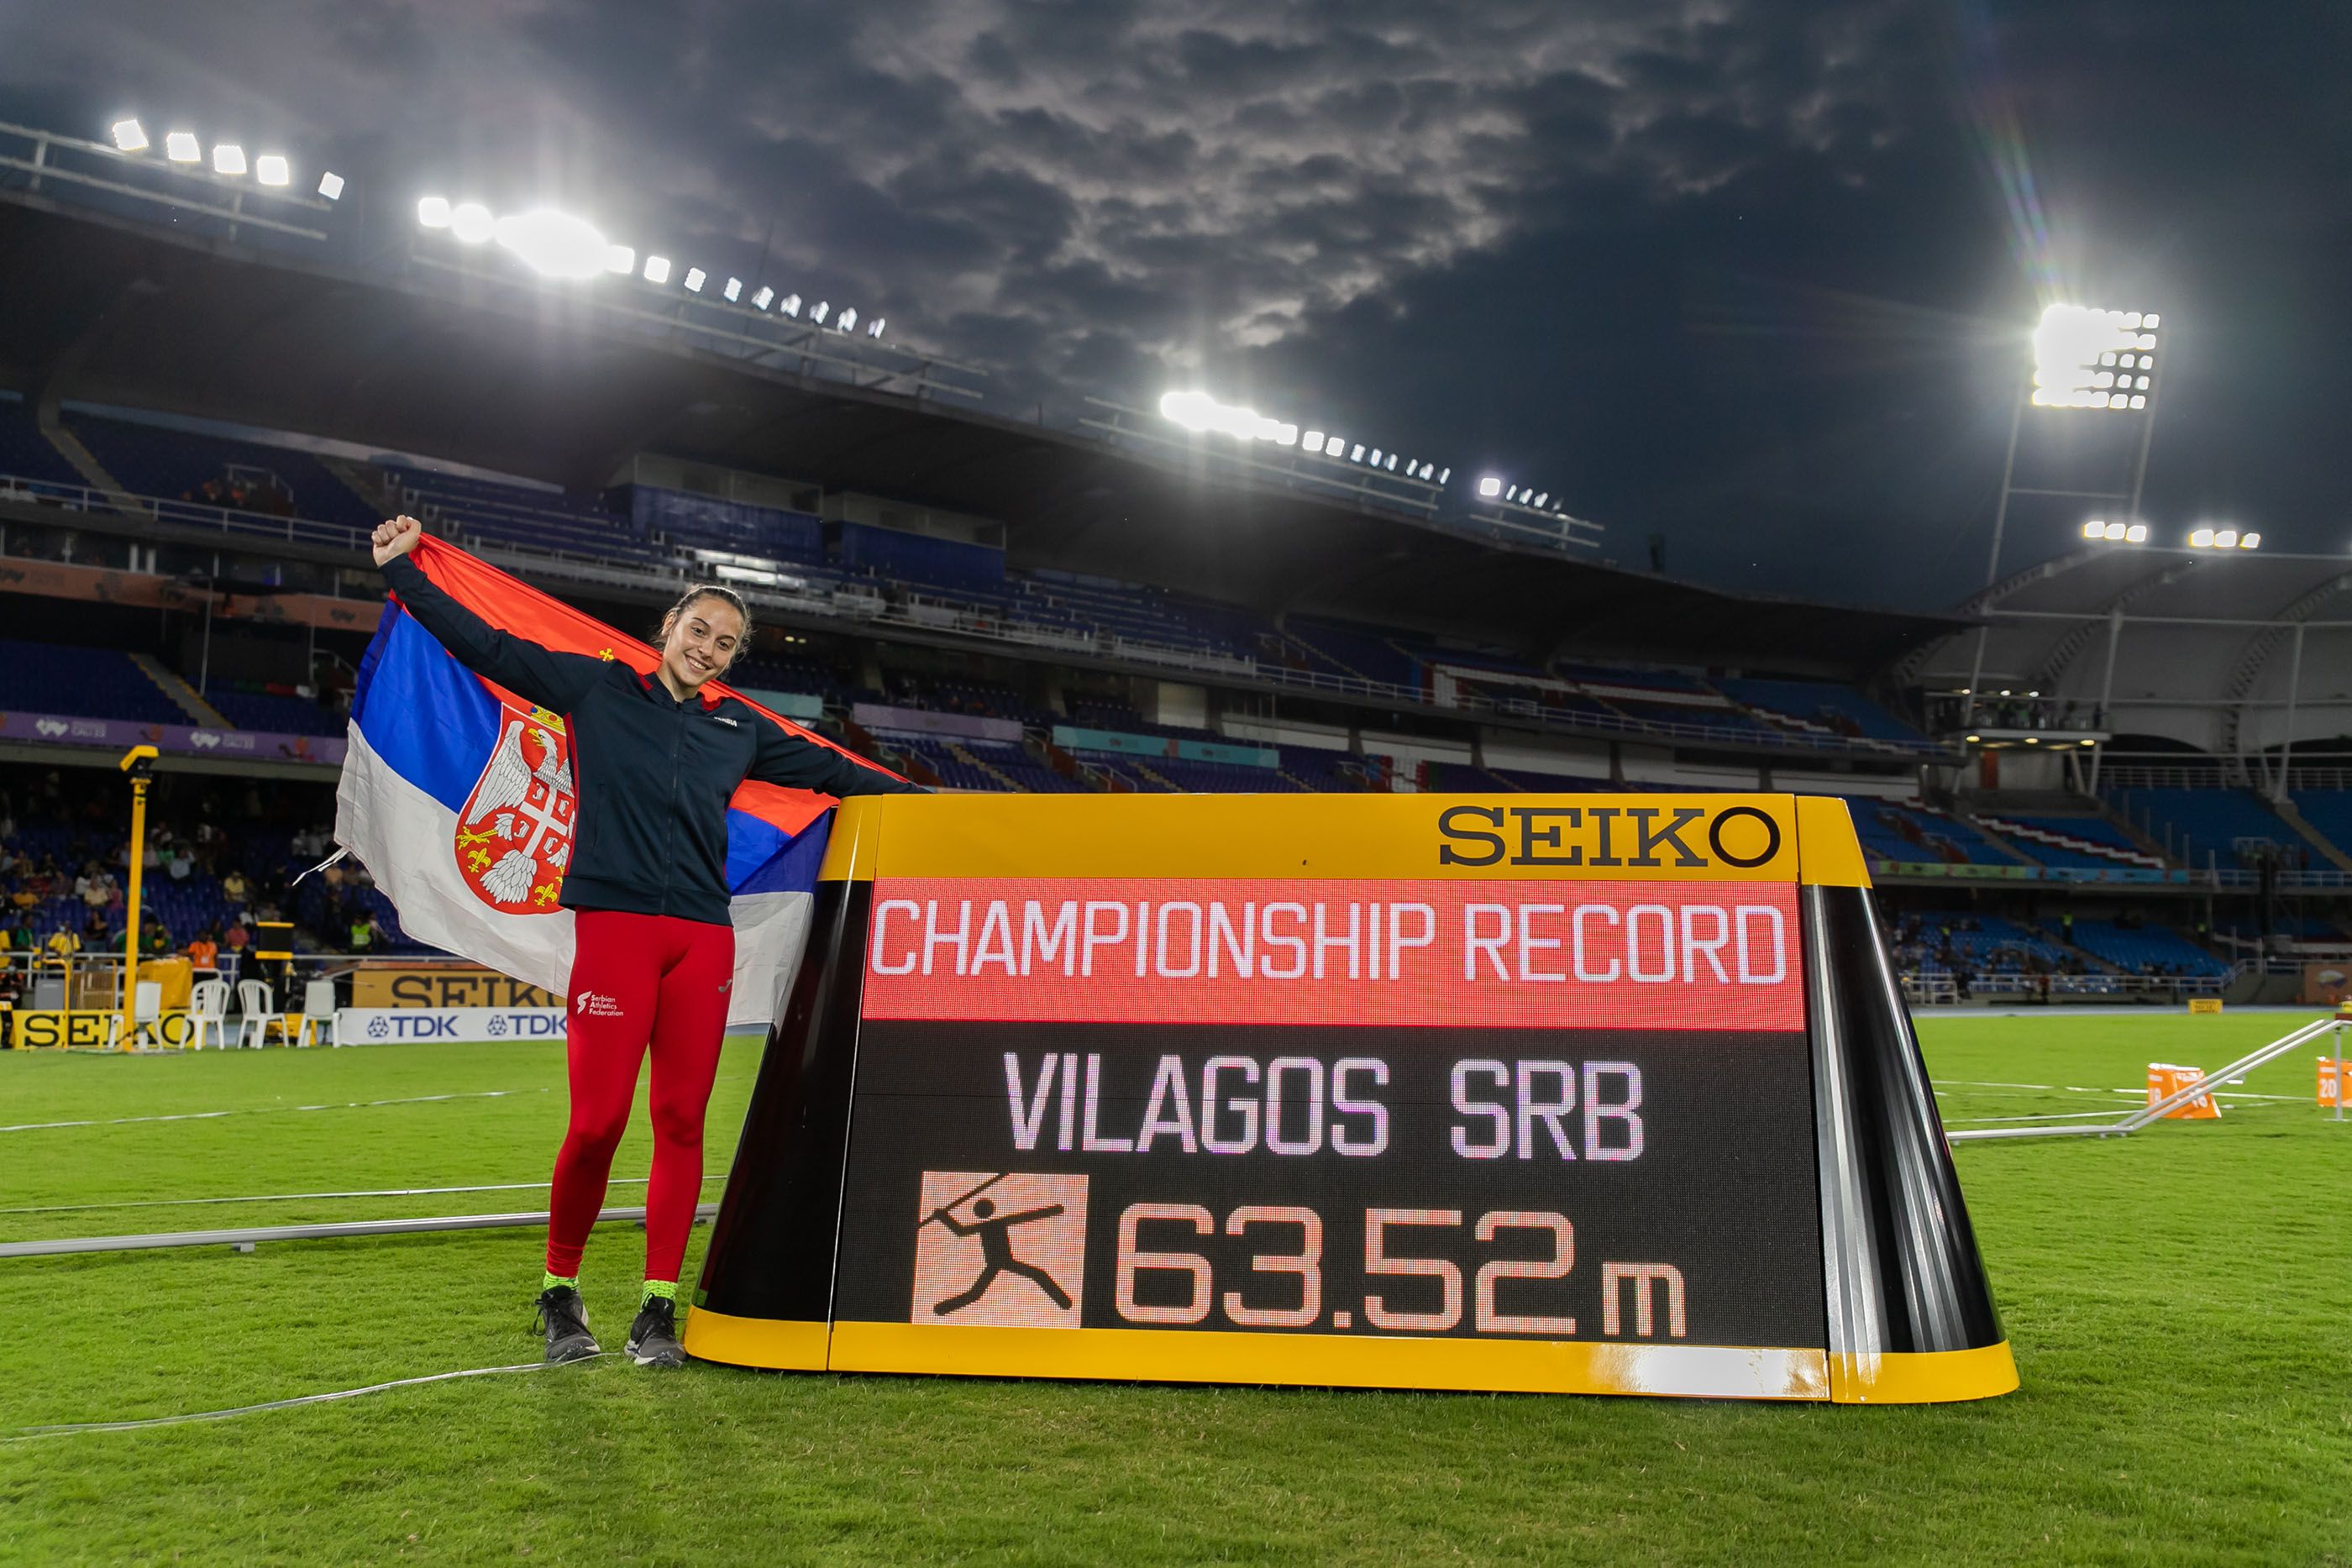 Adriana Vilagos celebrates her javelin championship record at the World Athletics U20 Championships Cali 22